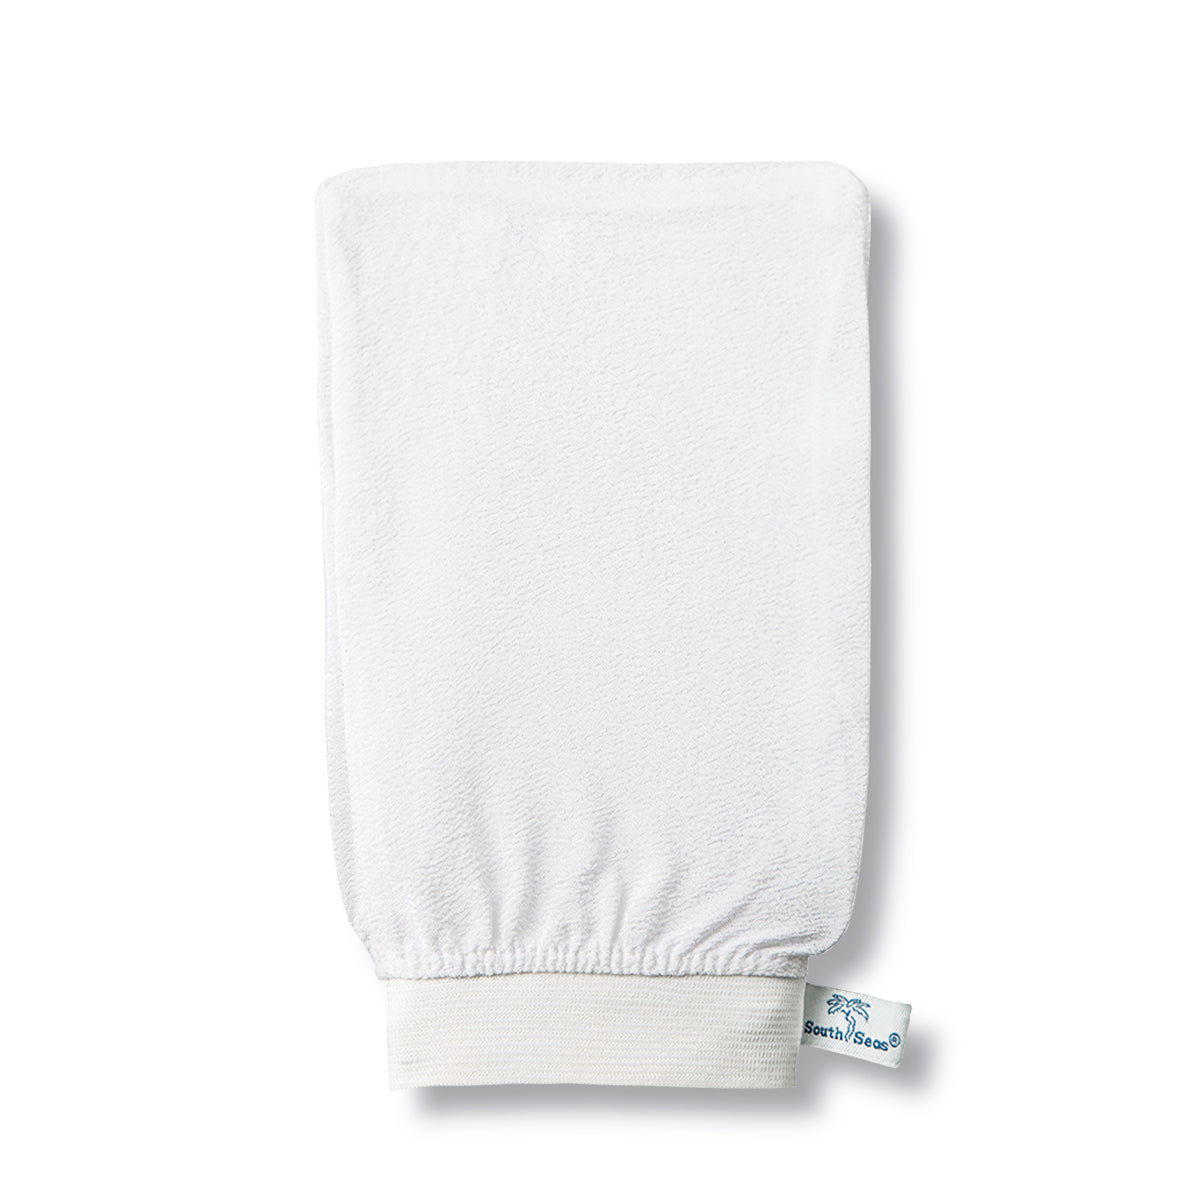 White rectangular cloth mitt South Seas self tanning exfoliating resurfacing mitt Dermal Essentials Medical Grade Skincare